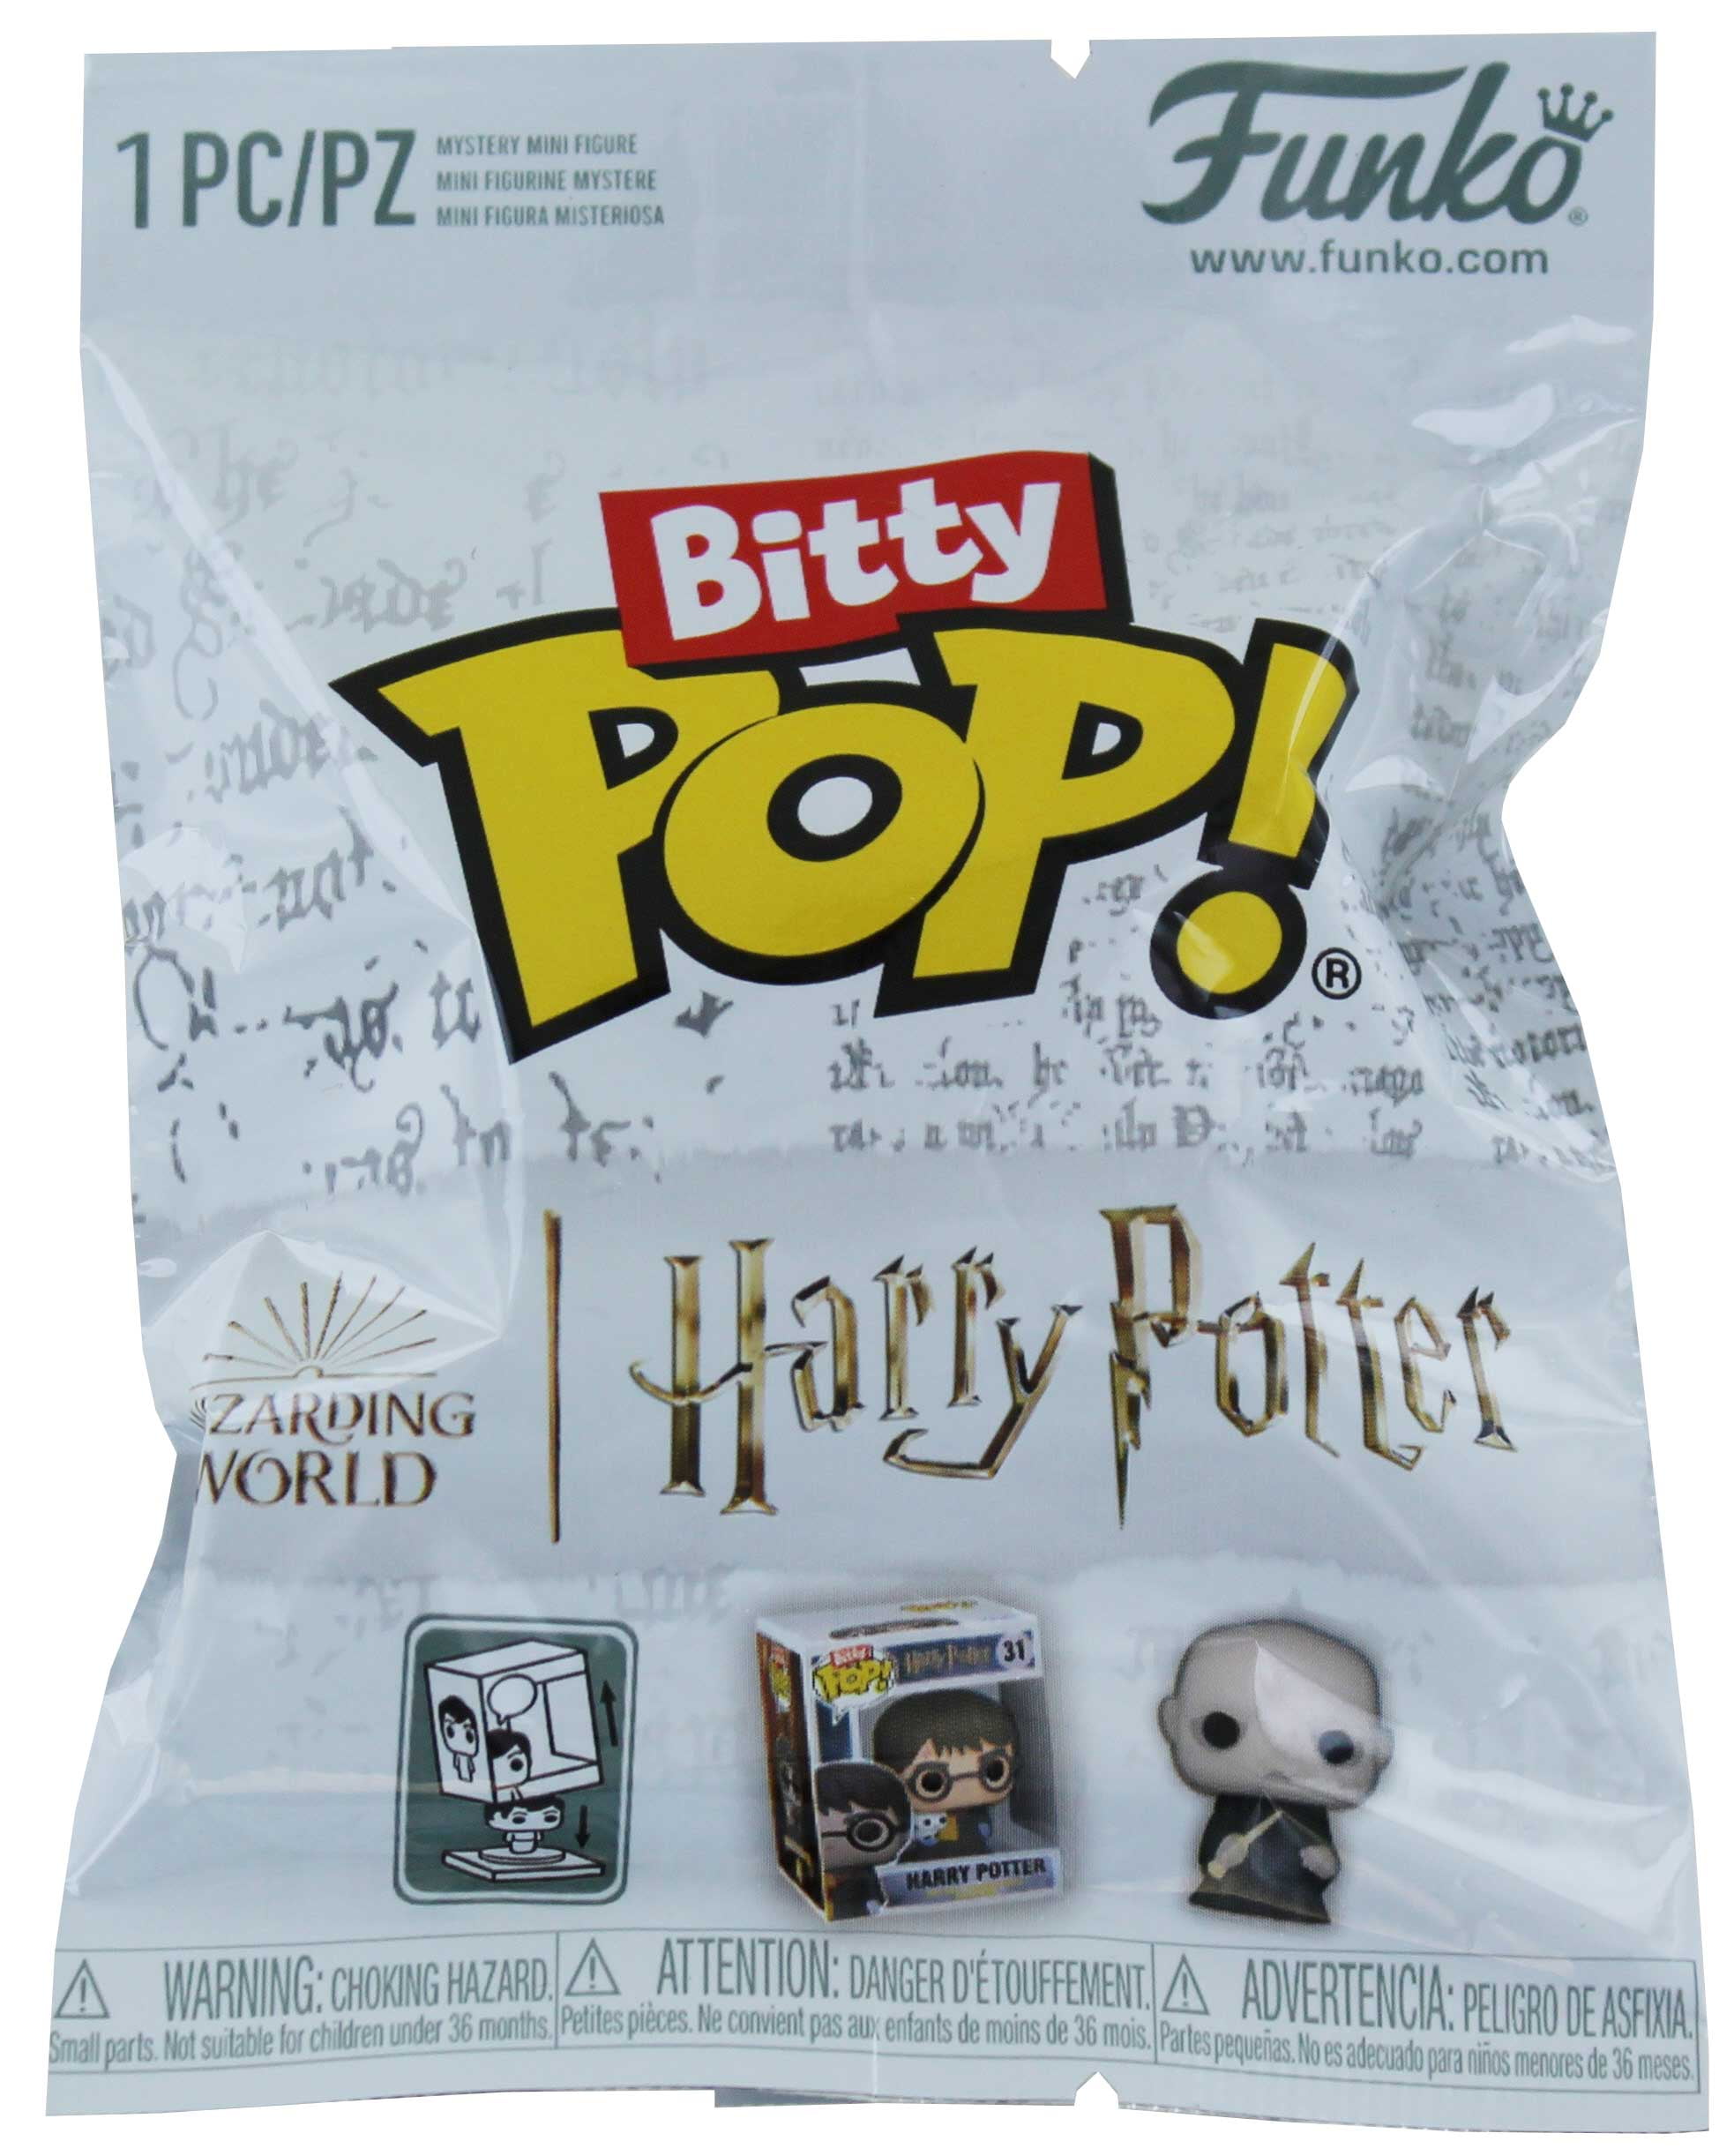 Funko Bitty POP! Harry Potter 1 Blind Bag Mini-Figure 